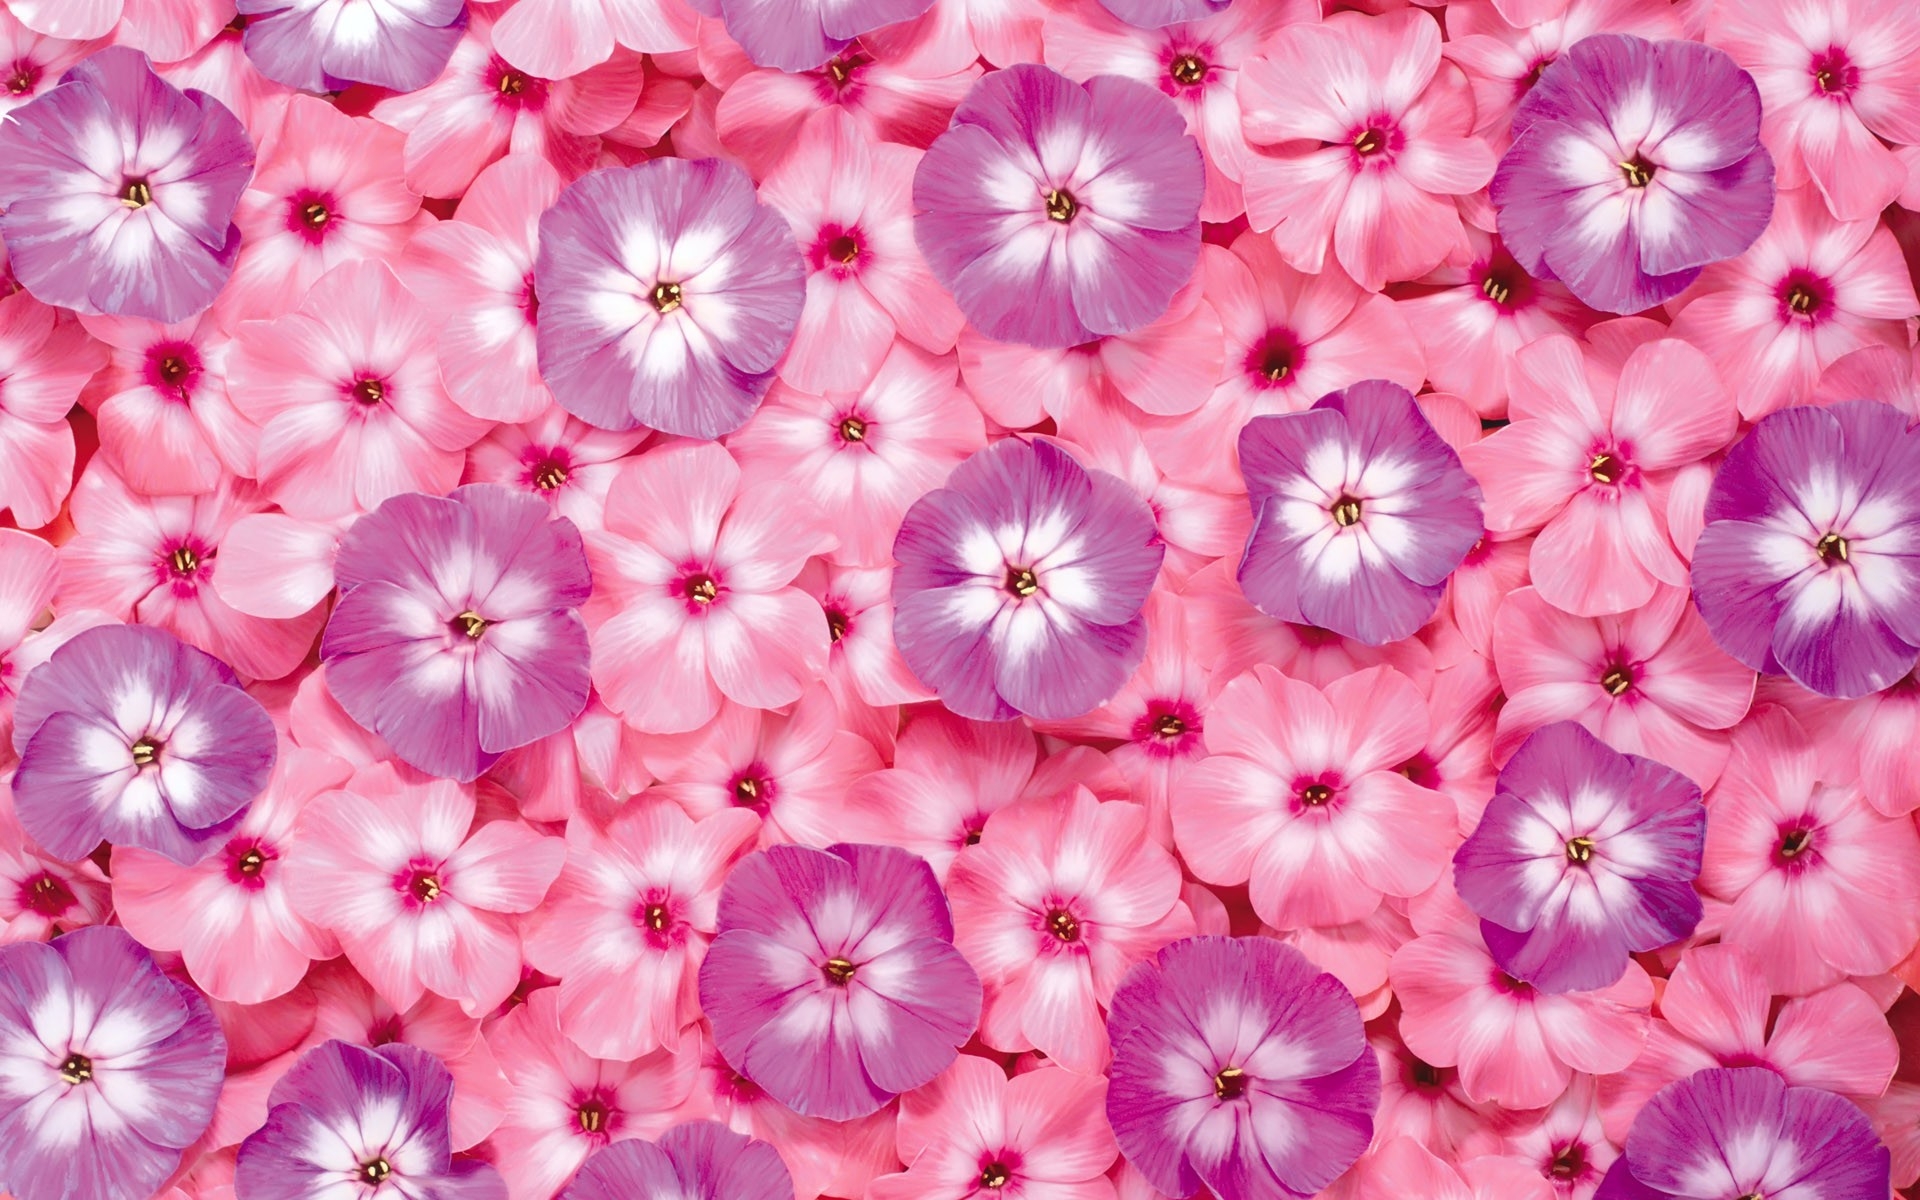 earth, phlox, flower, nature, pink flower, purple flower, flowers